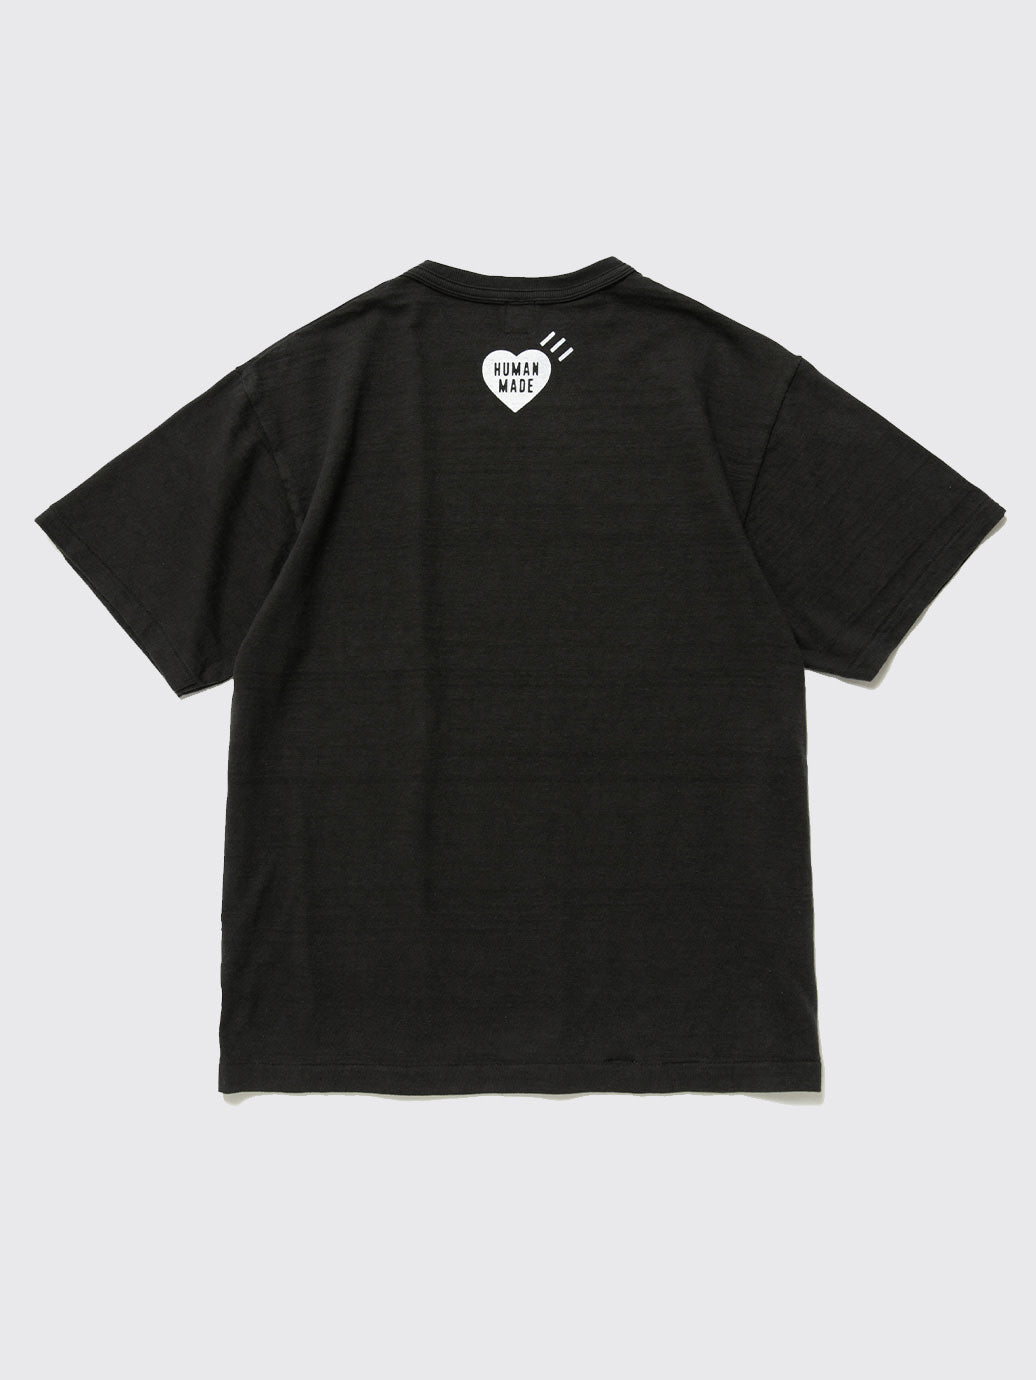 Human Made Heart Logo T-Shirt in Black